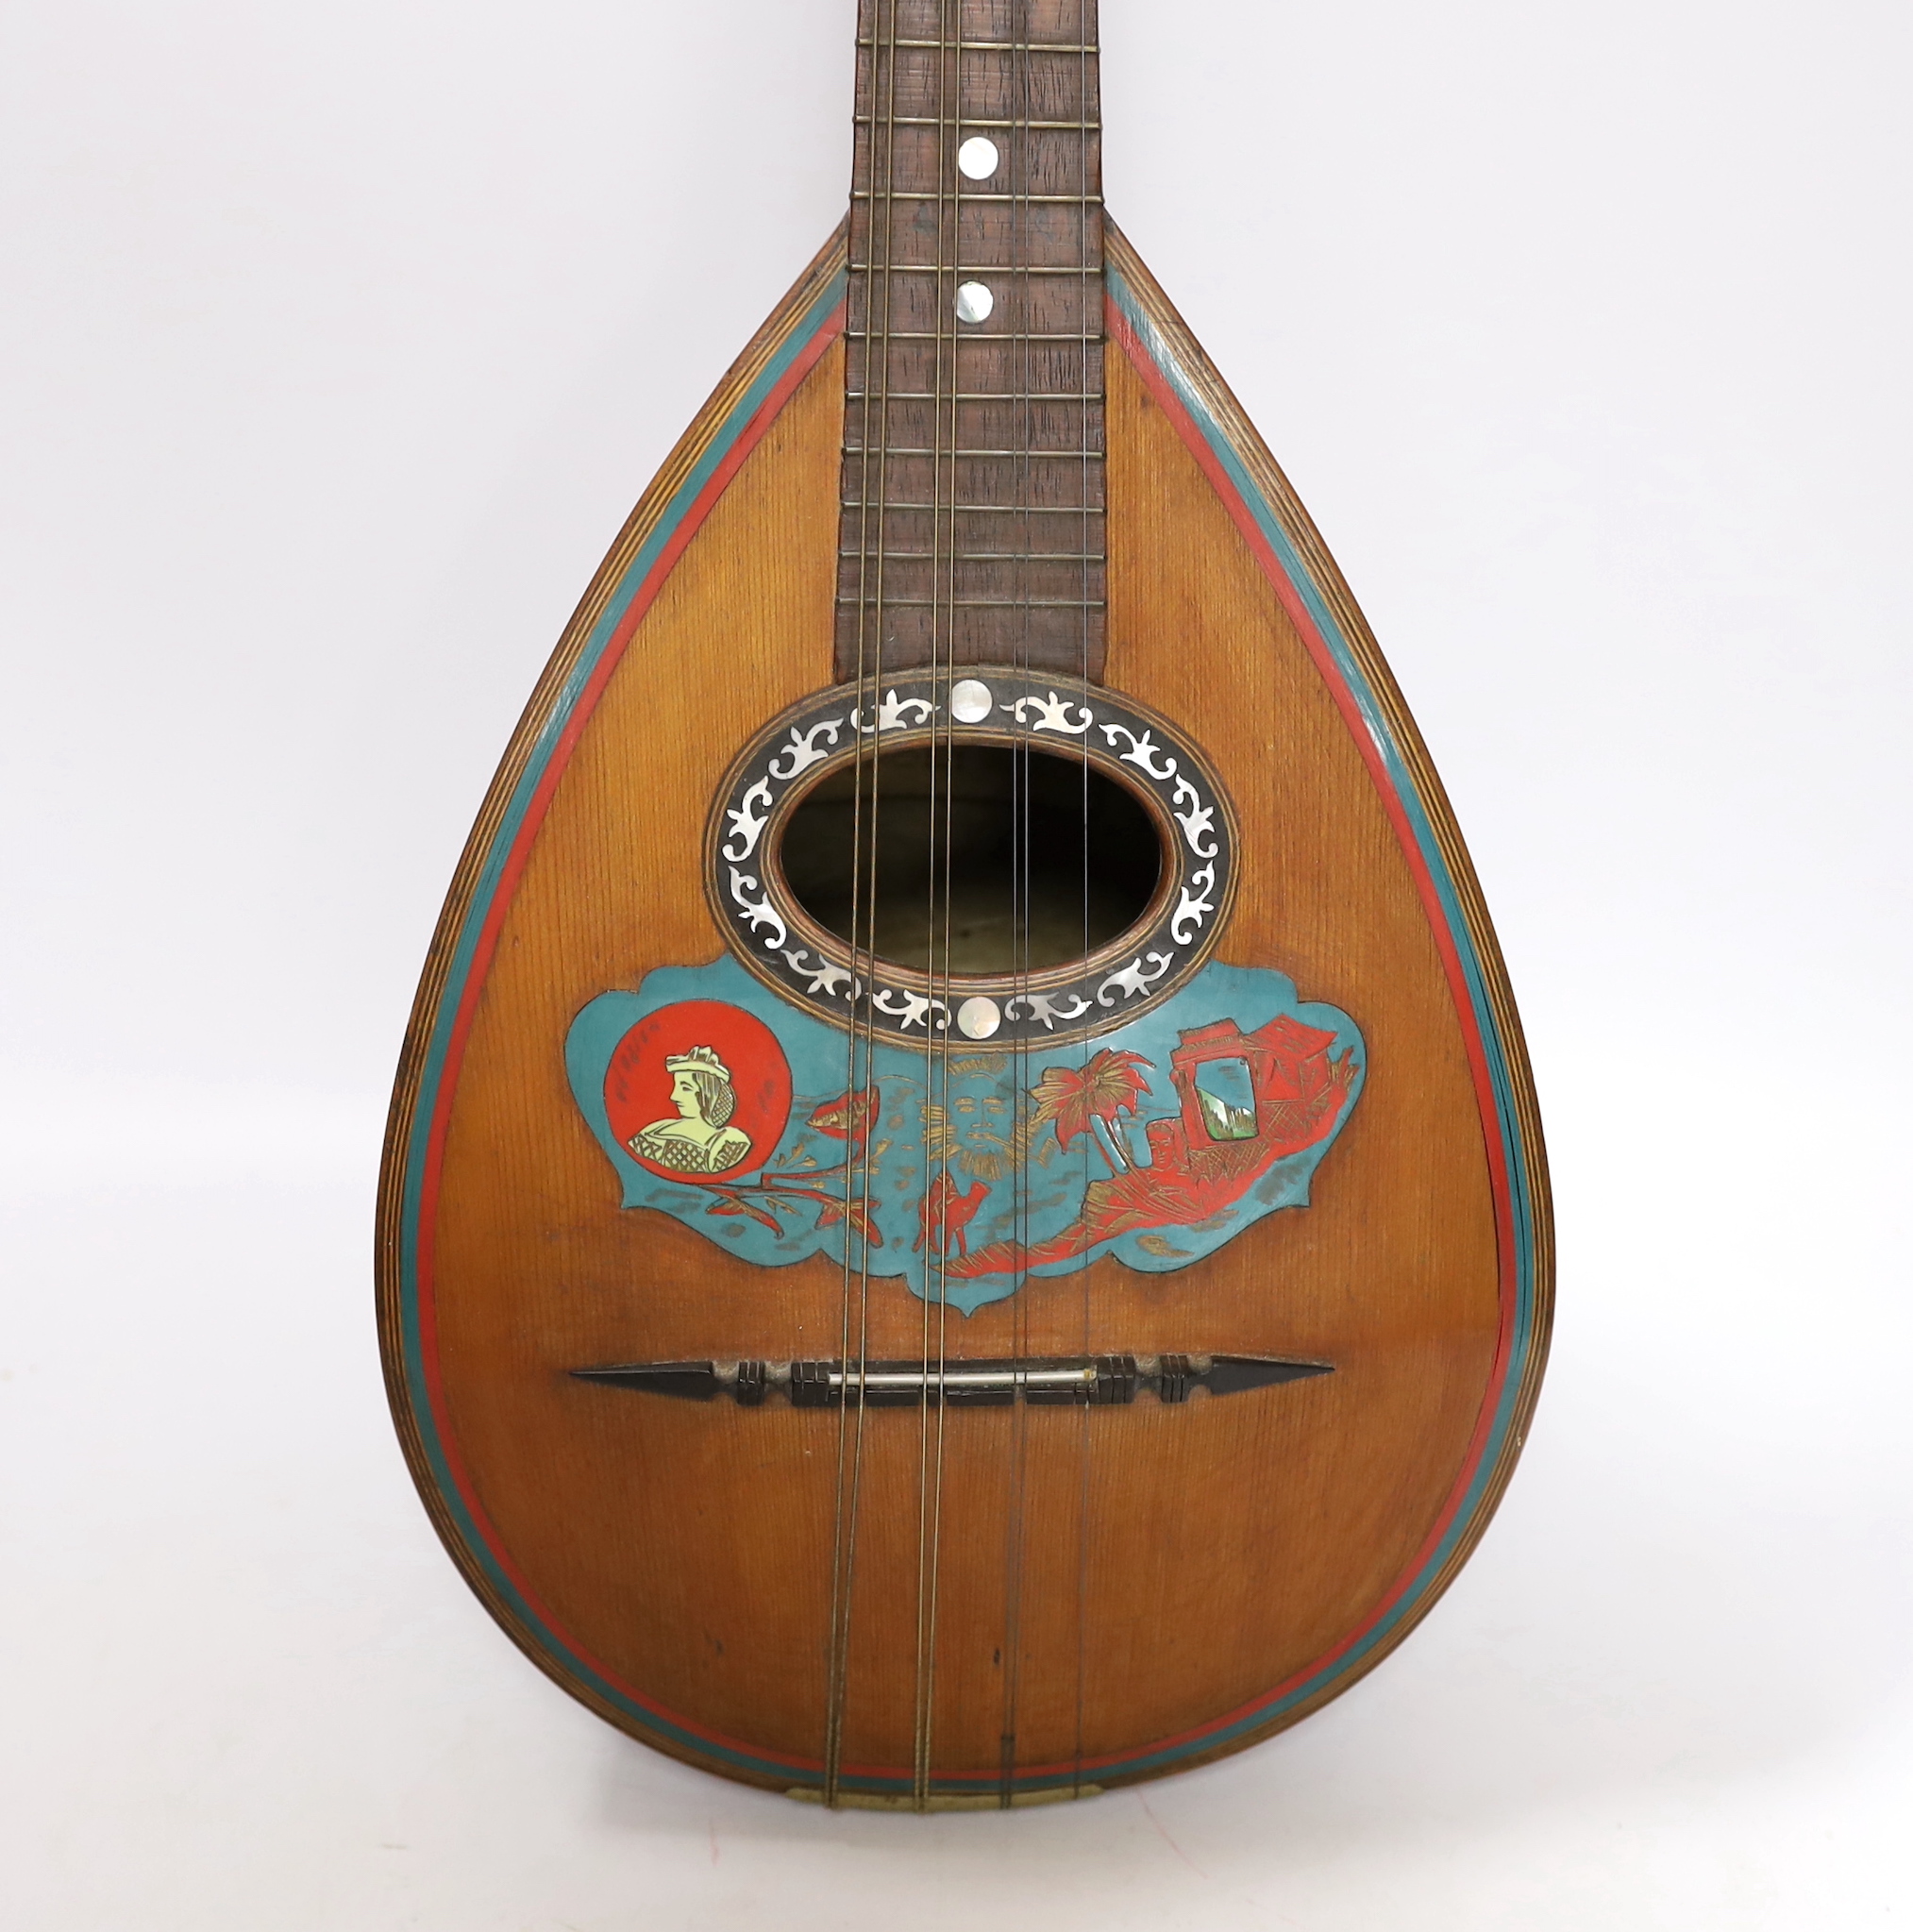 A Fratelli Hasermann, Napoli, mandolin, early 20th century